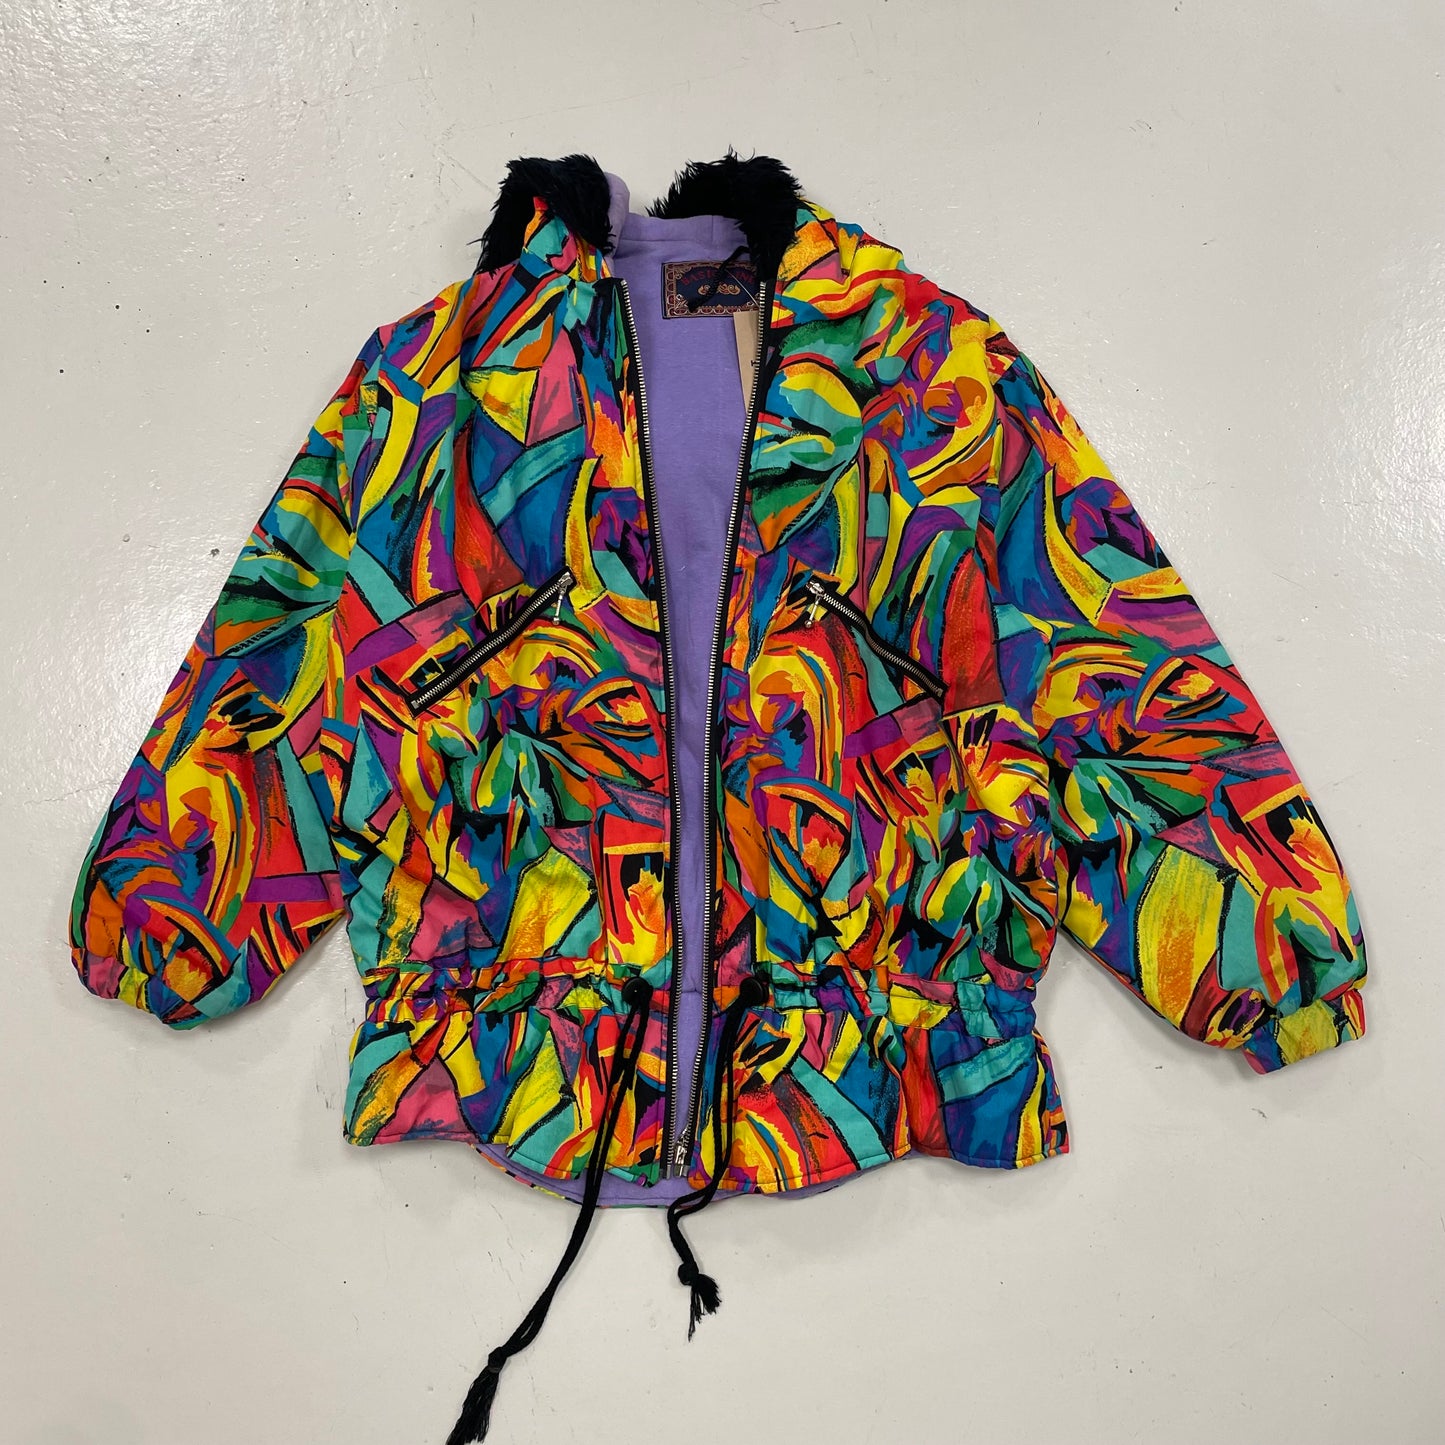 Vintage 90s Ski Jacket in Multicolour